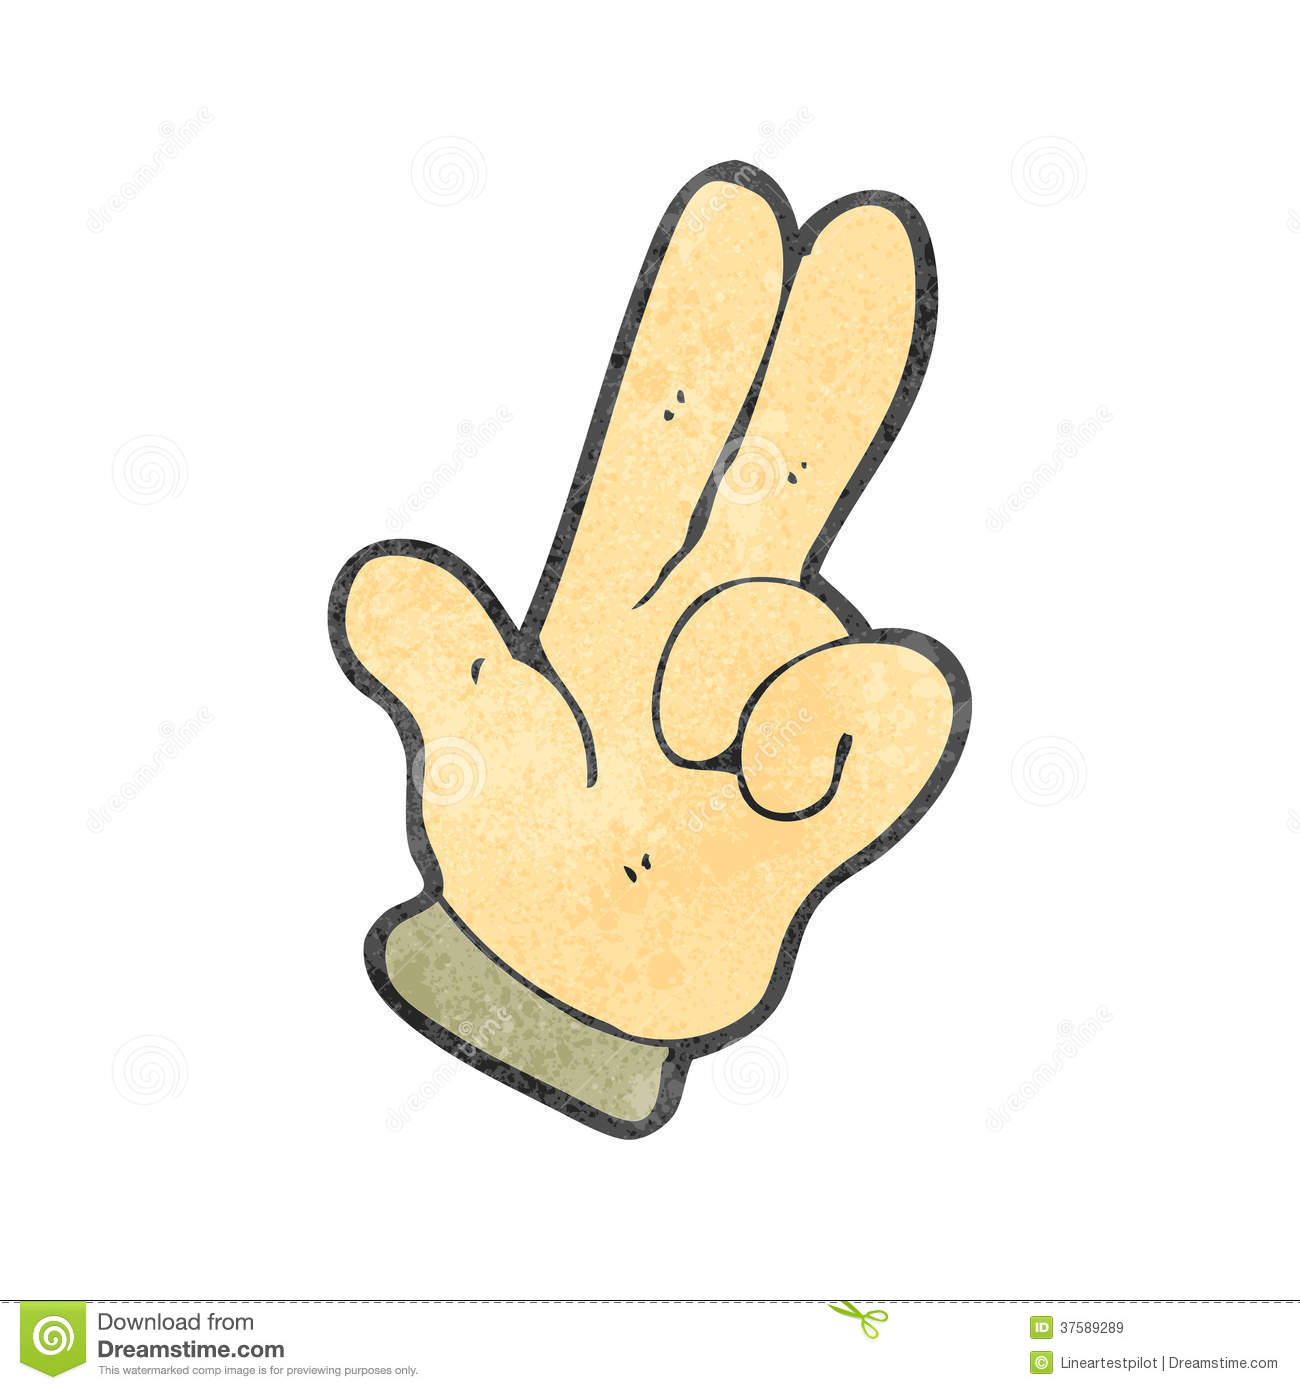 Retro Cartoon Two Fingers Symbol Royalty Free Stock Images   Image